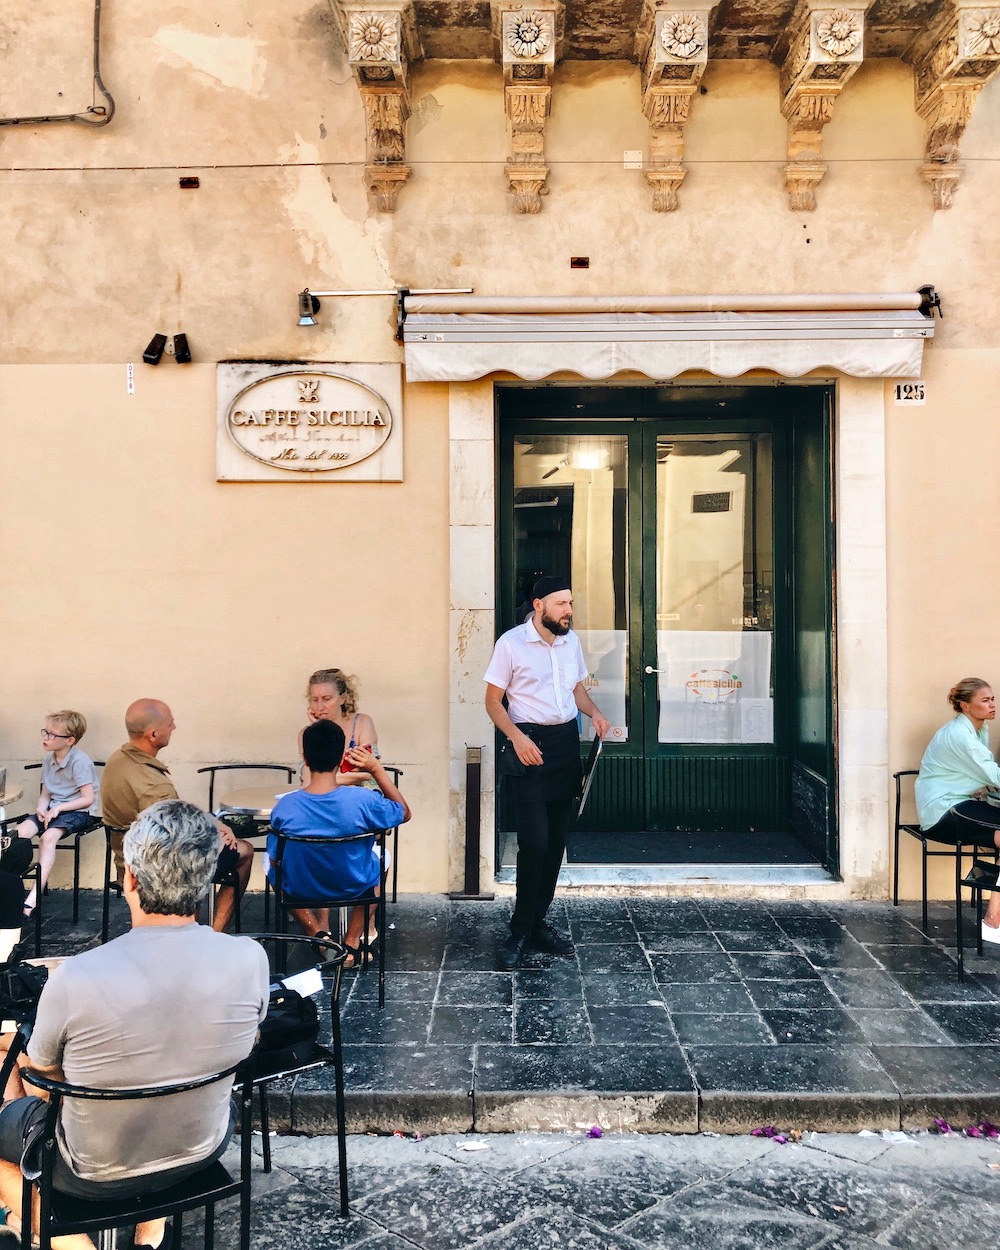 Cafe Sicilia in Noto